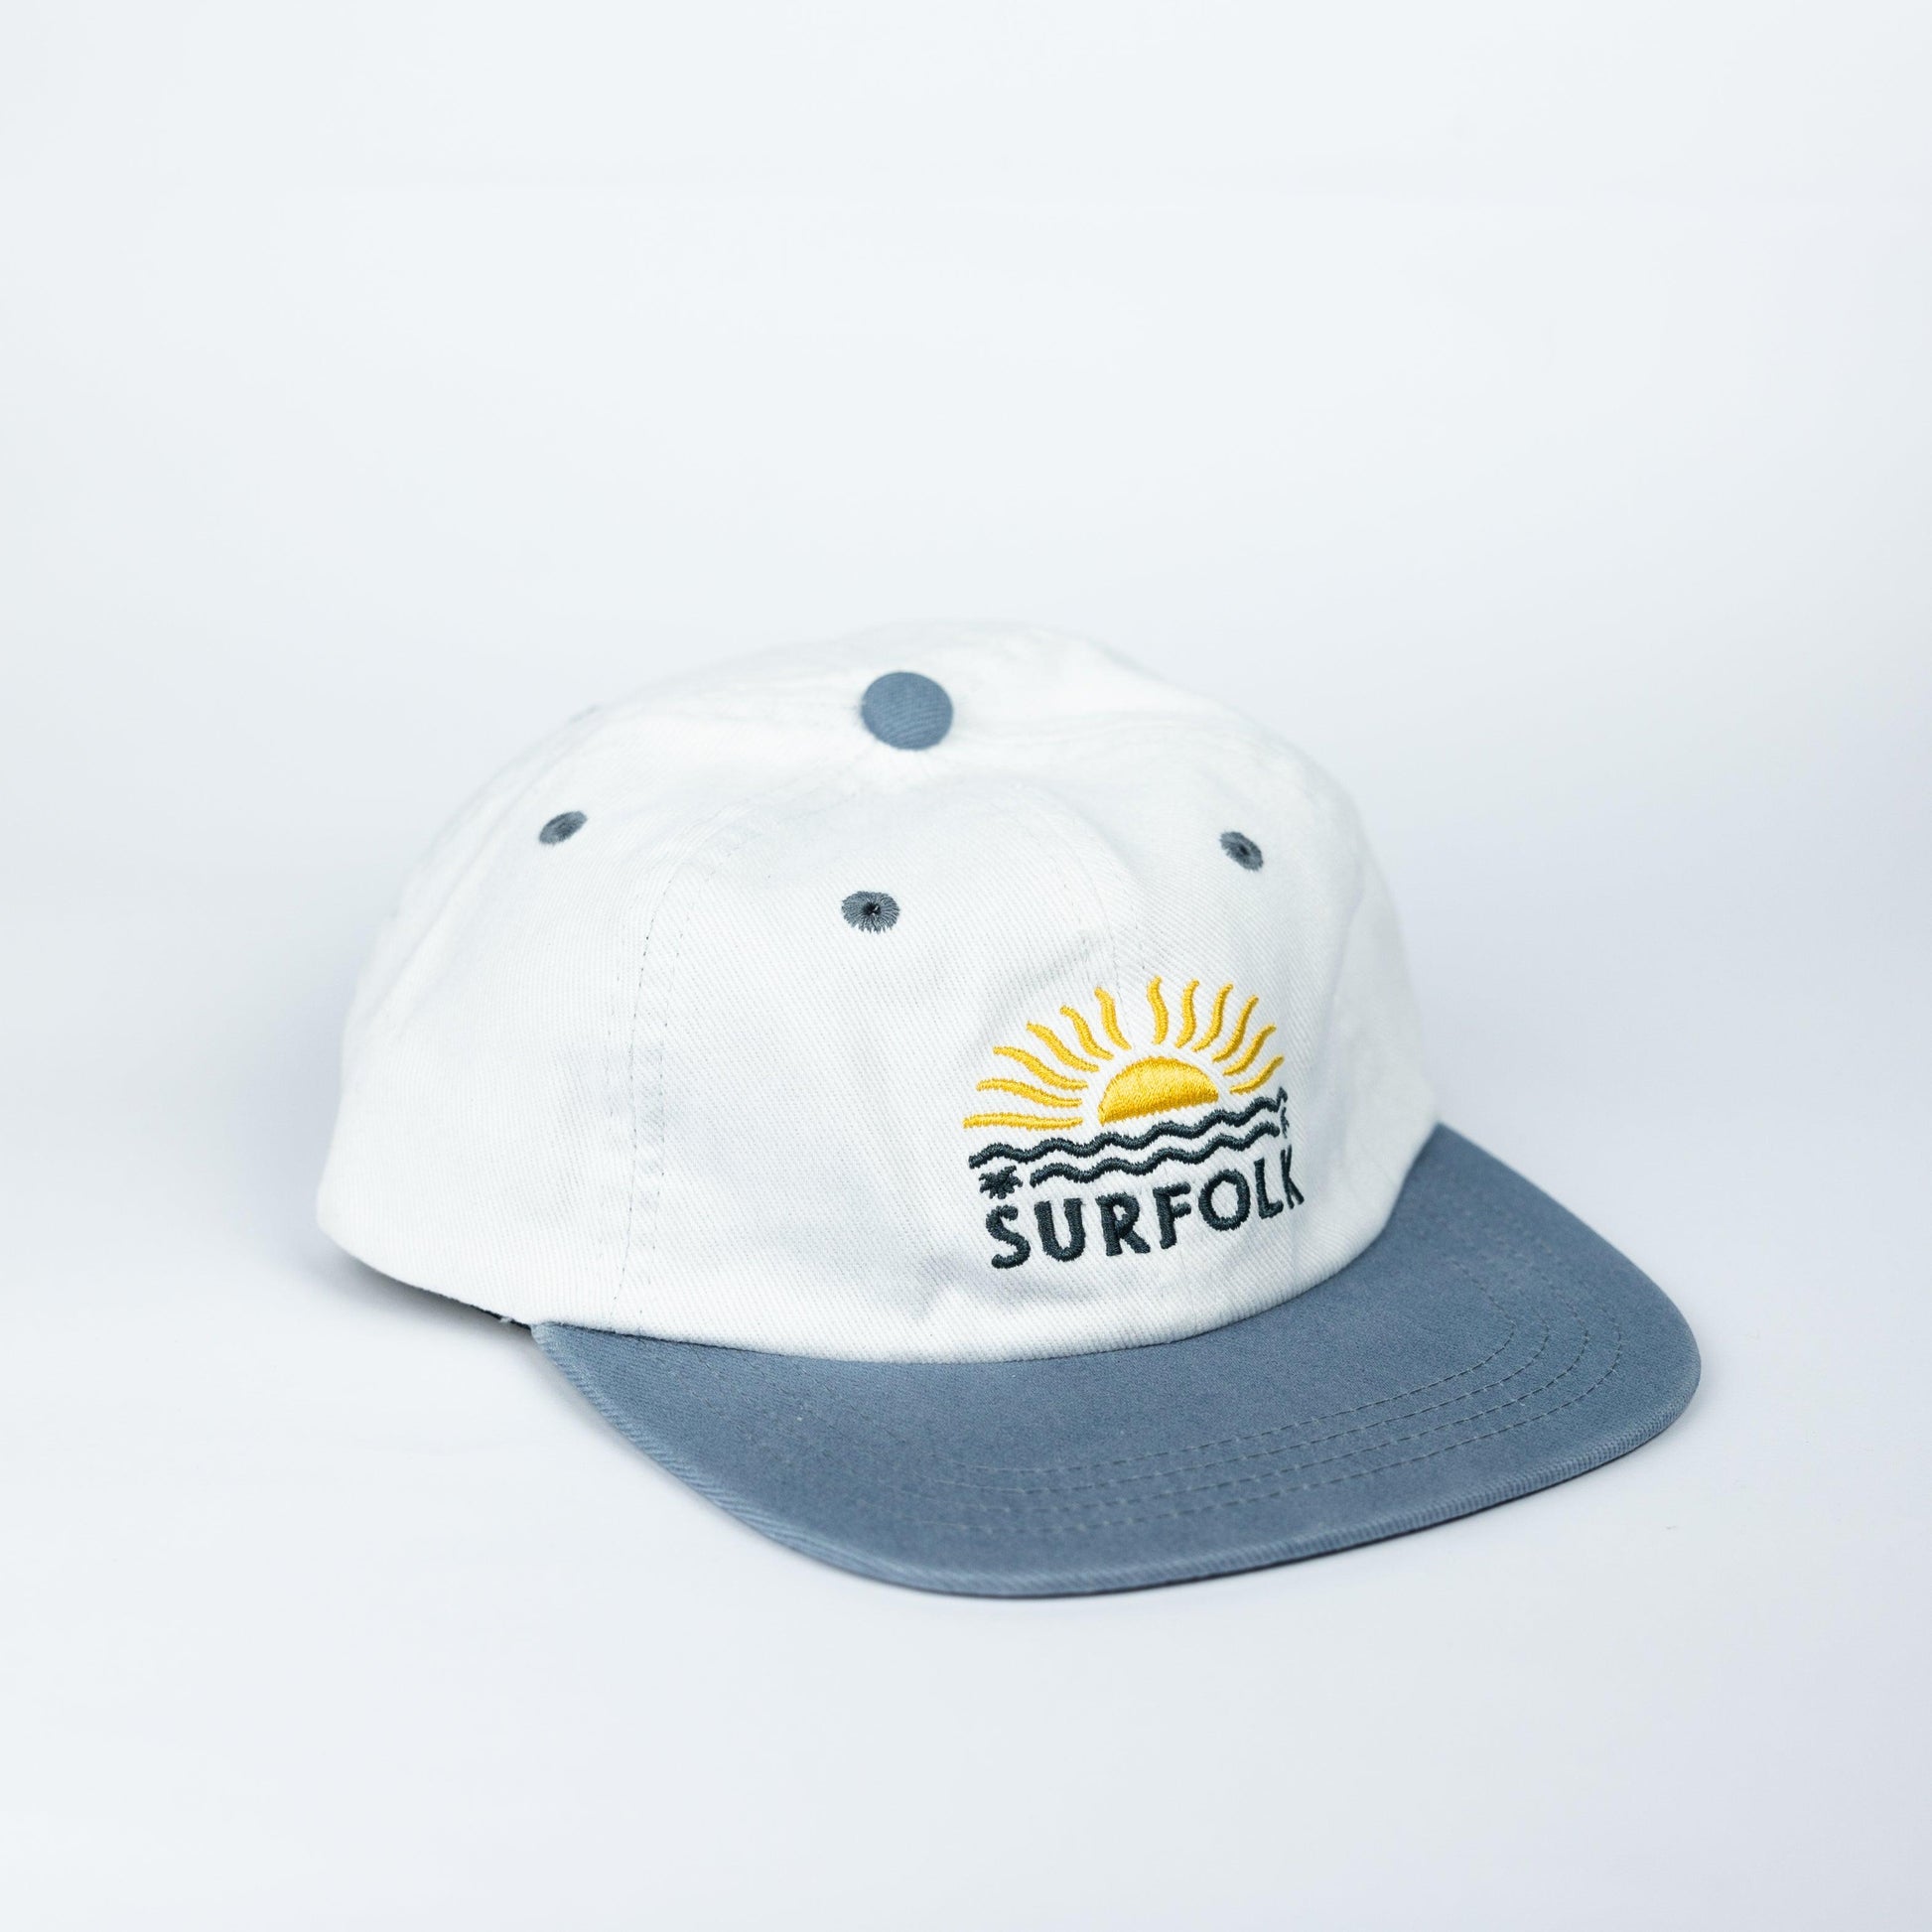 Rising Sun Cap - Surfolk